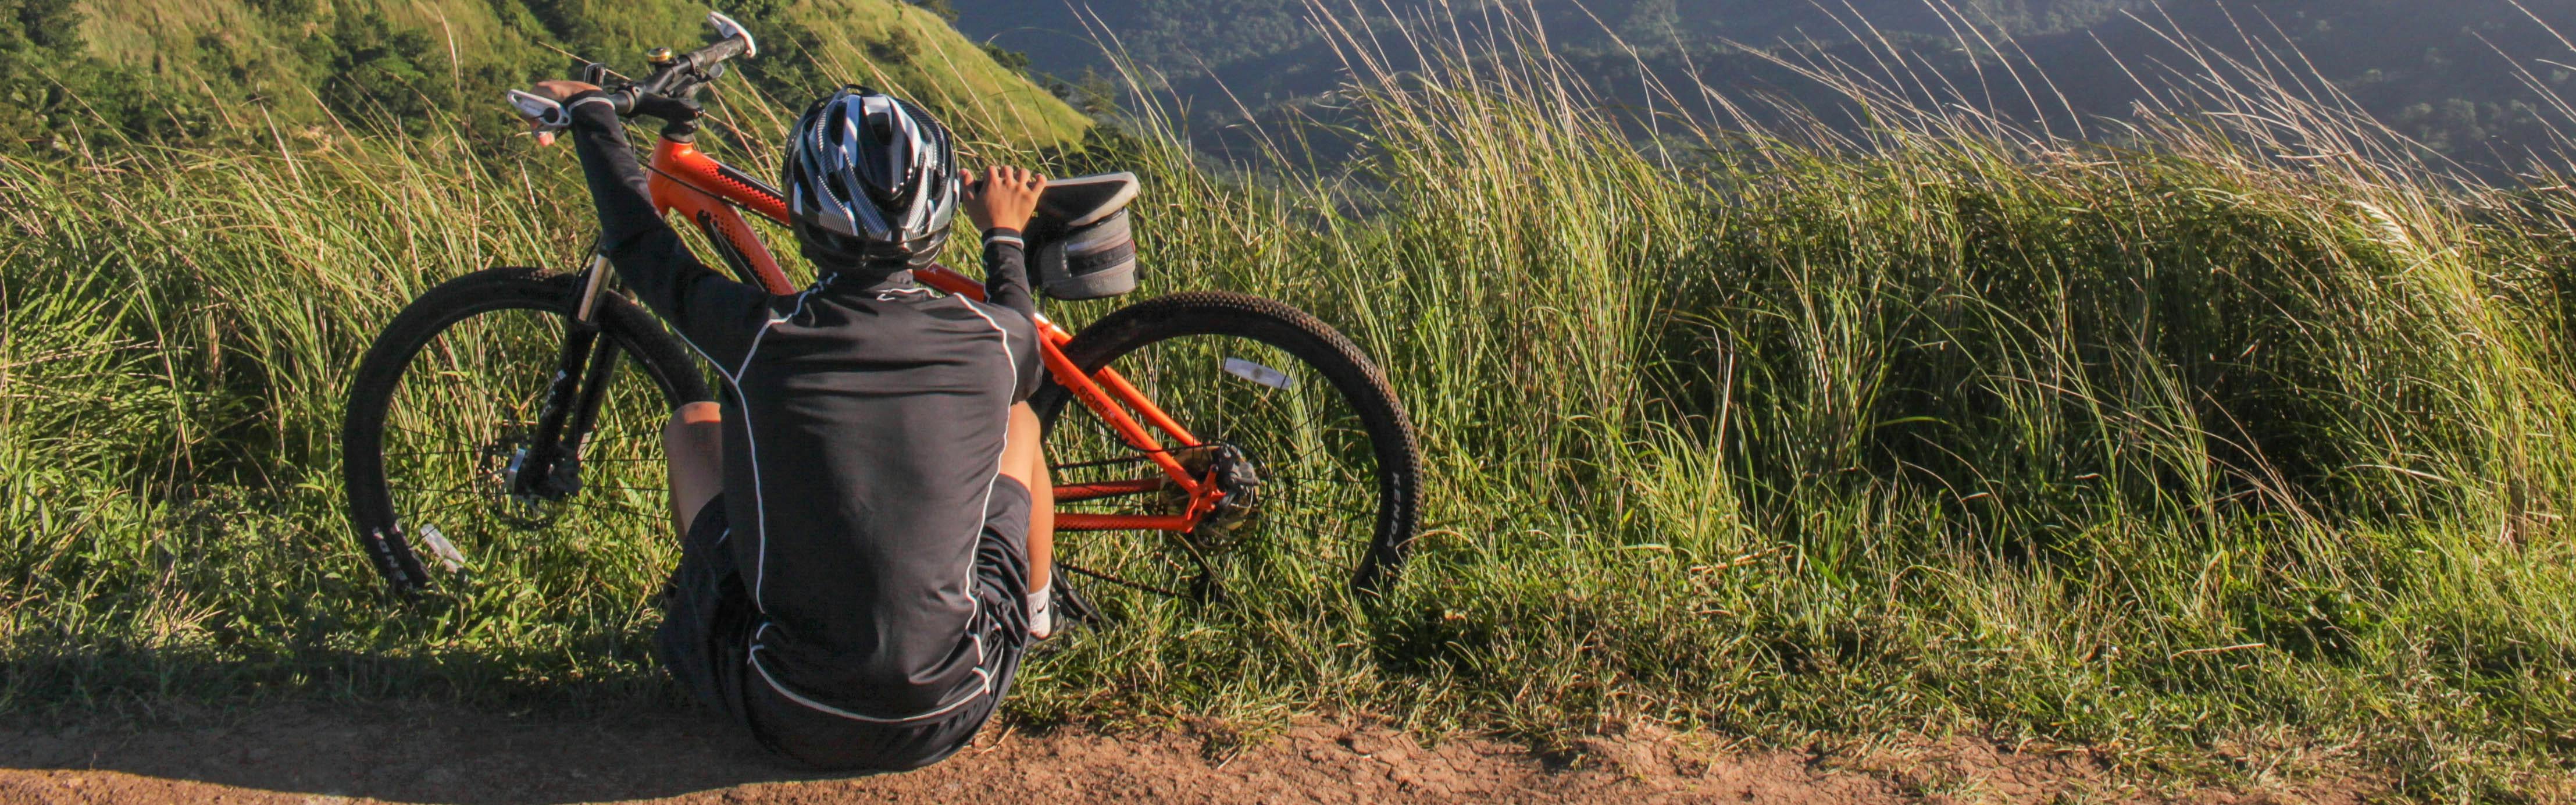 A cyclist sits on the ground next to his orange mountain bike